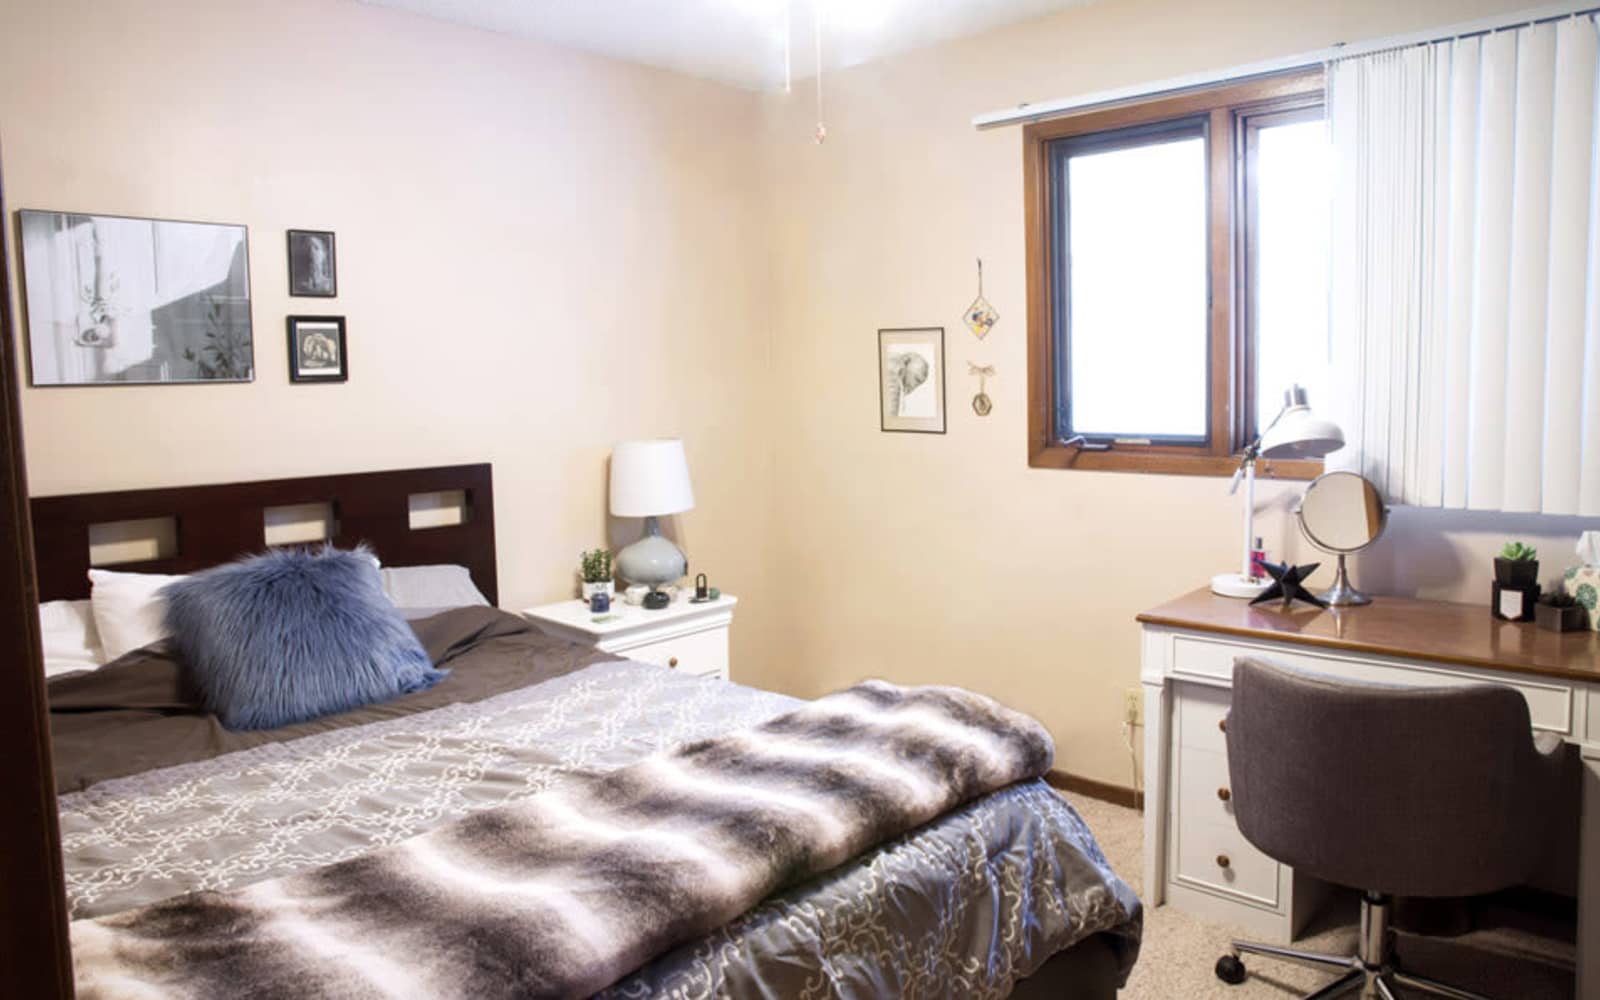 A cozy bedroom at Westwood Village in Ames, Iowa